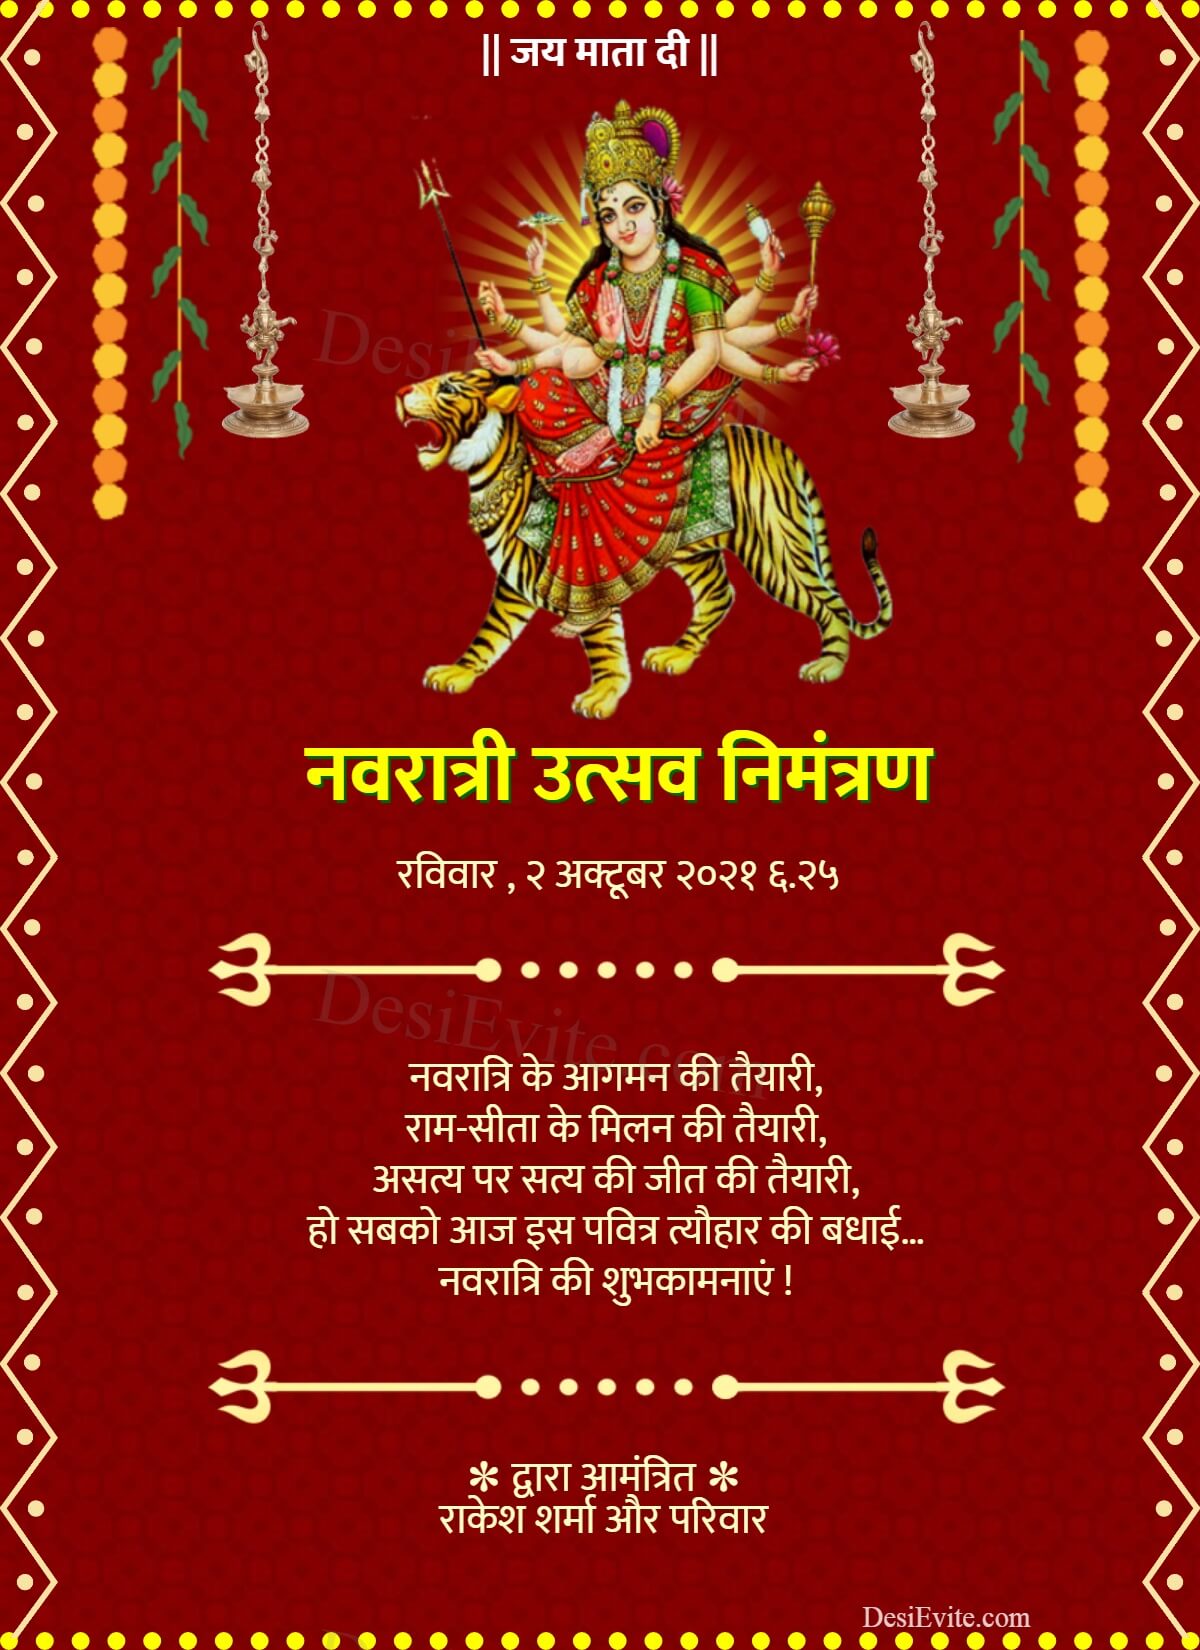 Hindi navratri festival online invitation 110